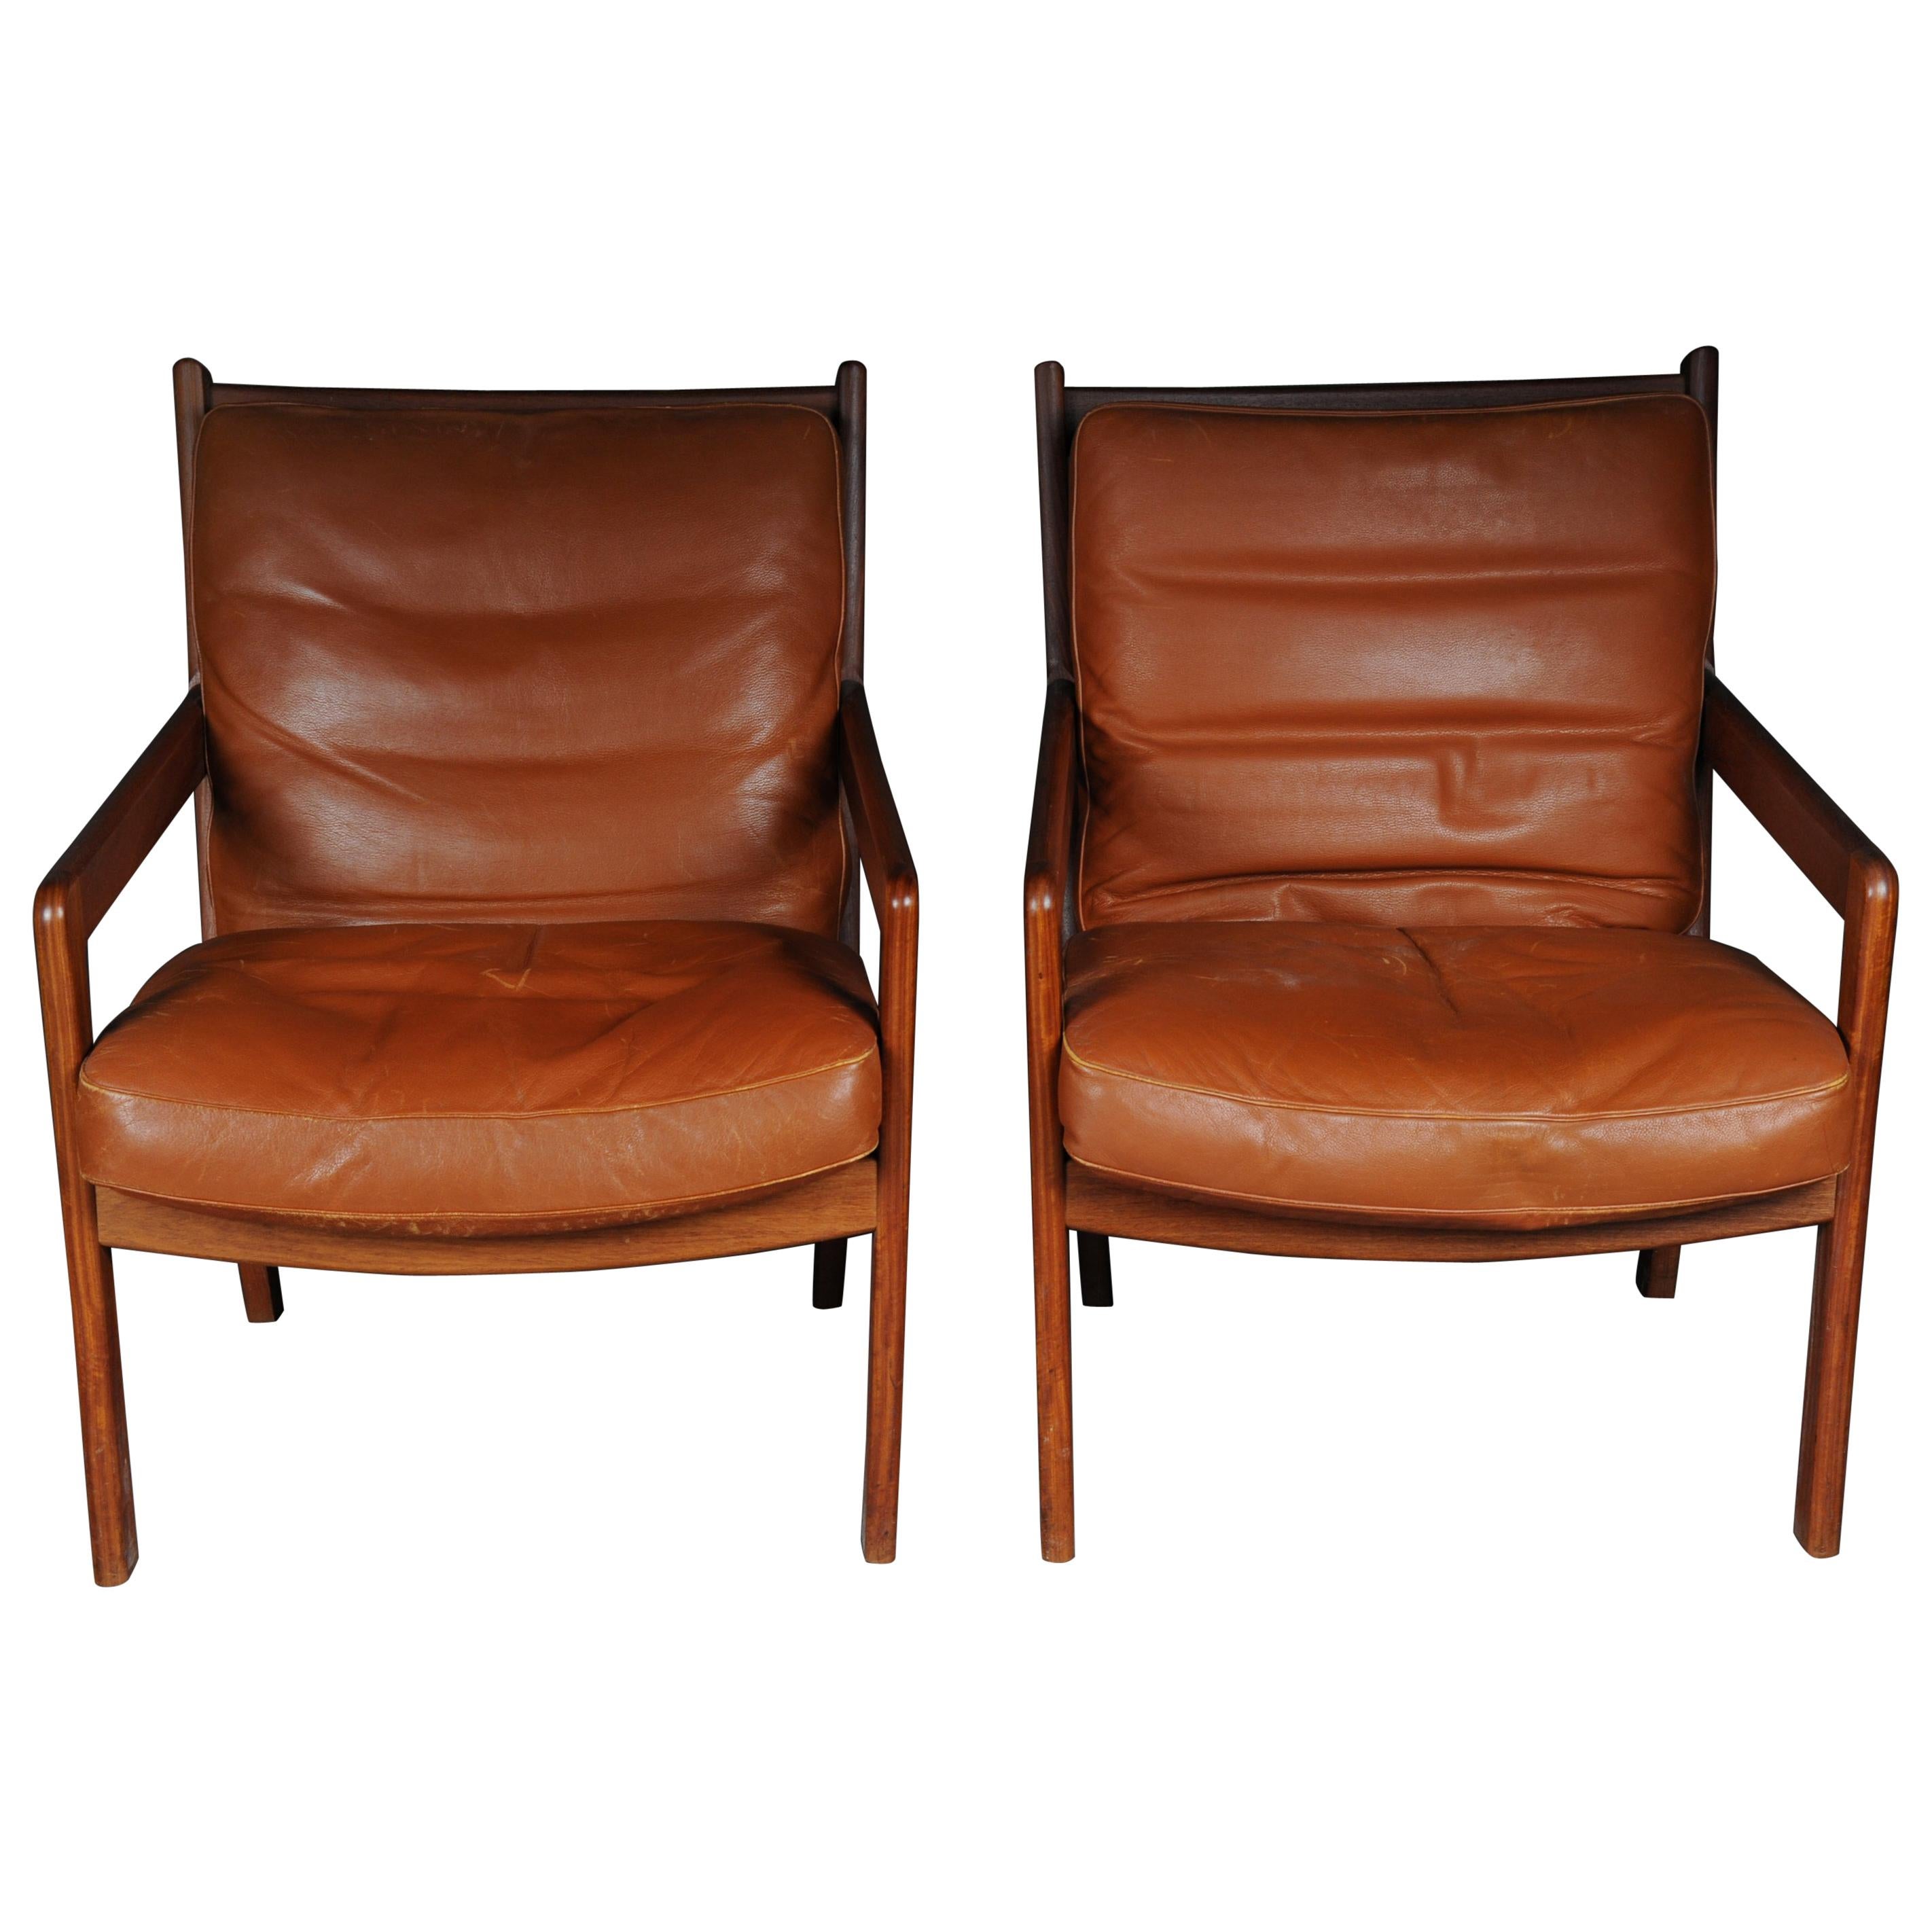 Pair of vintage teak armchairs, chairs 60s / 70s, Danish